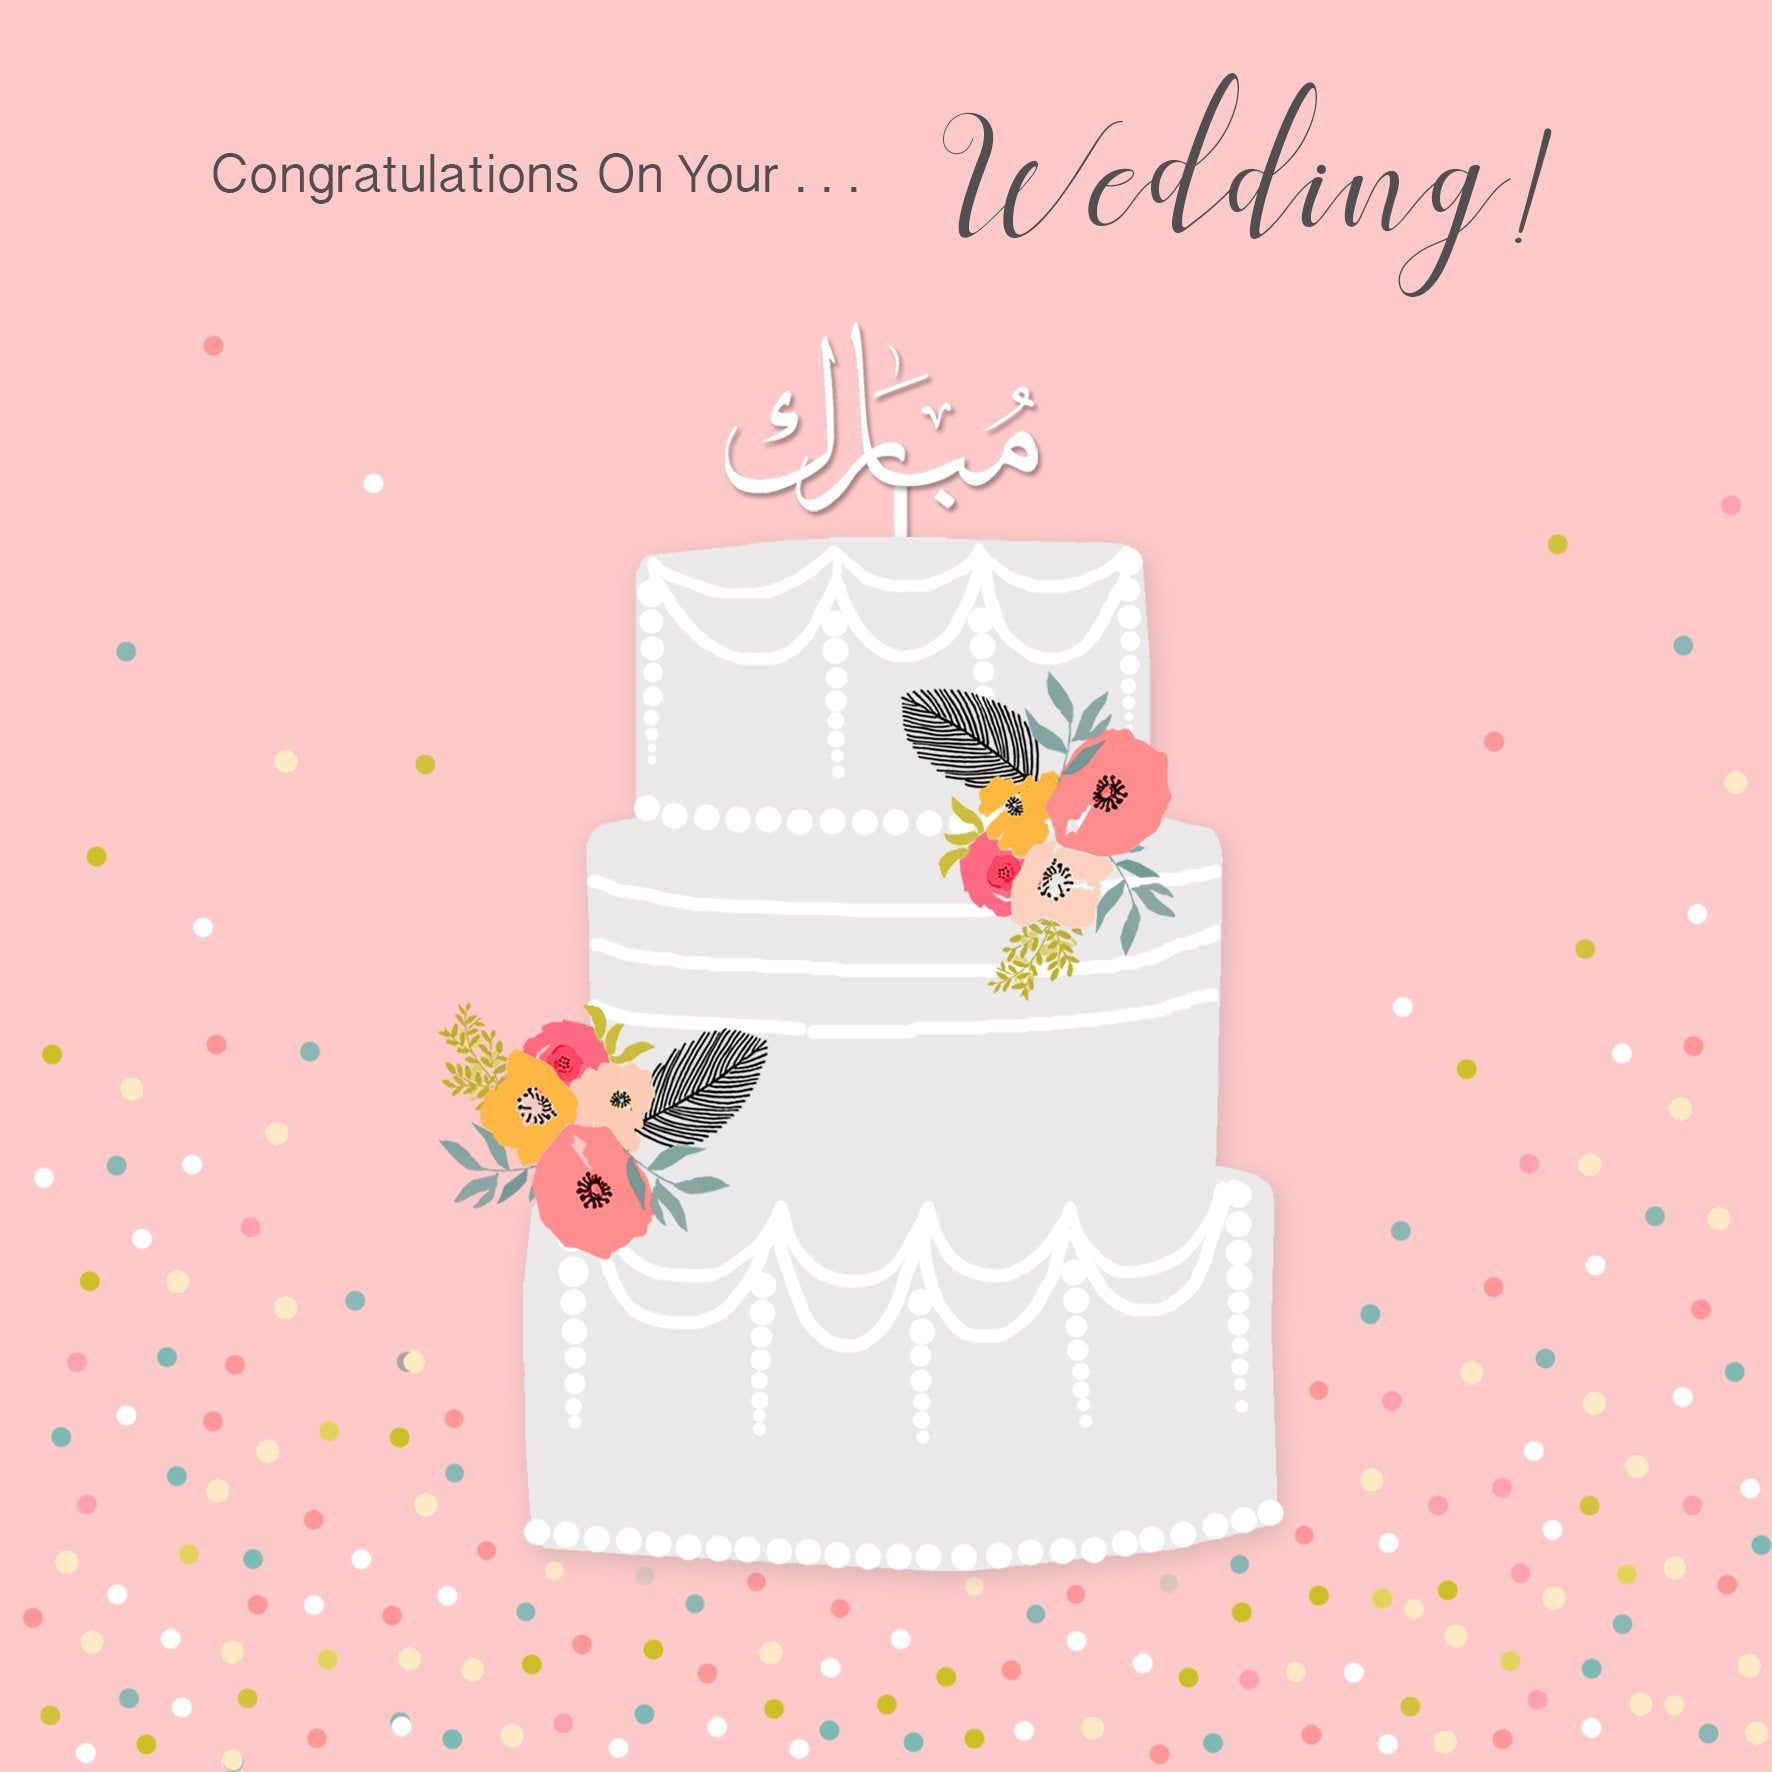 Congratulations On Your Wedding!- Mubarak